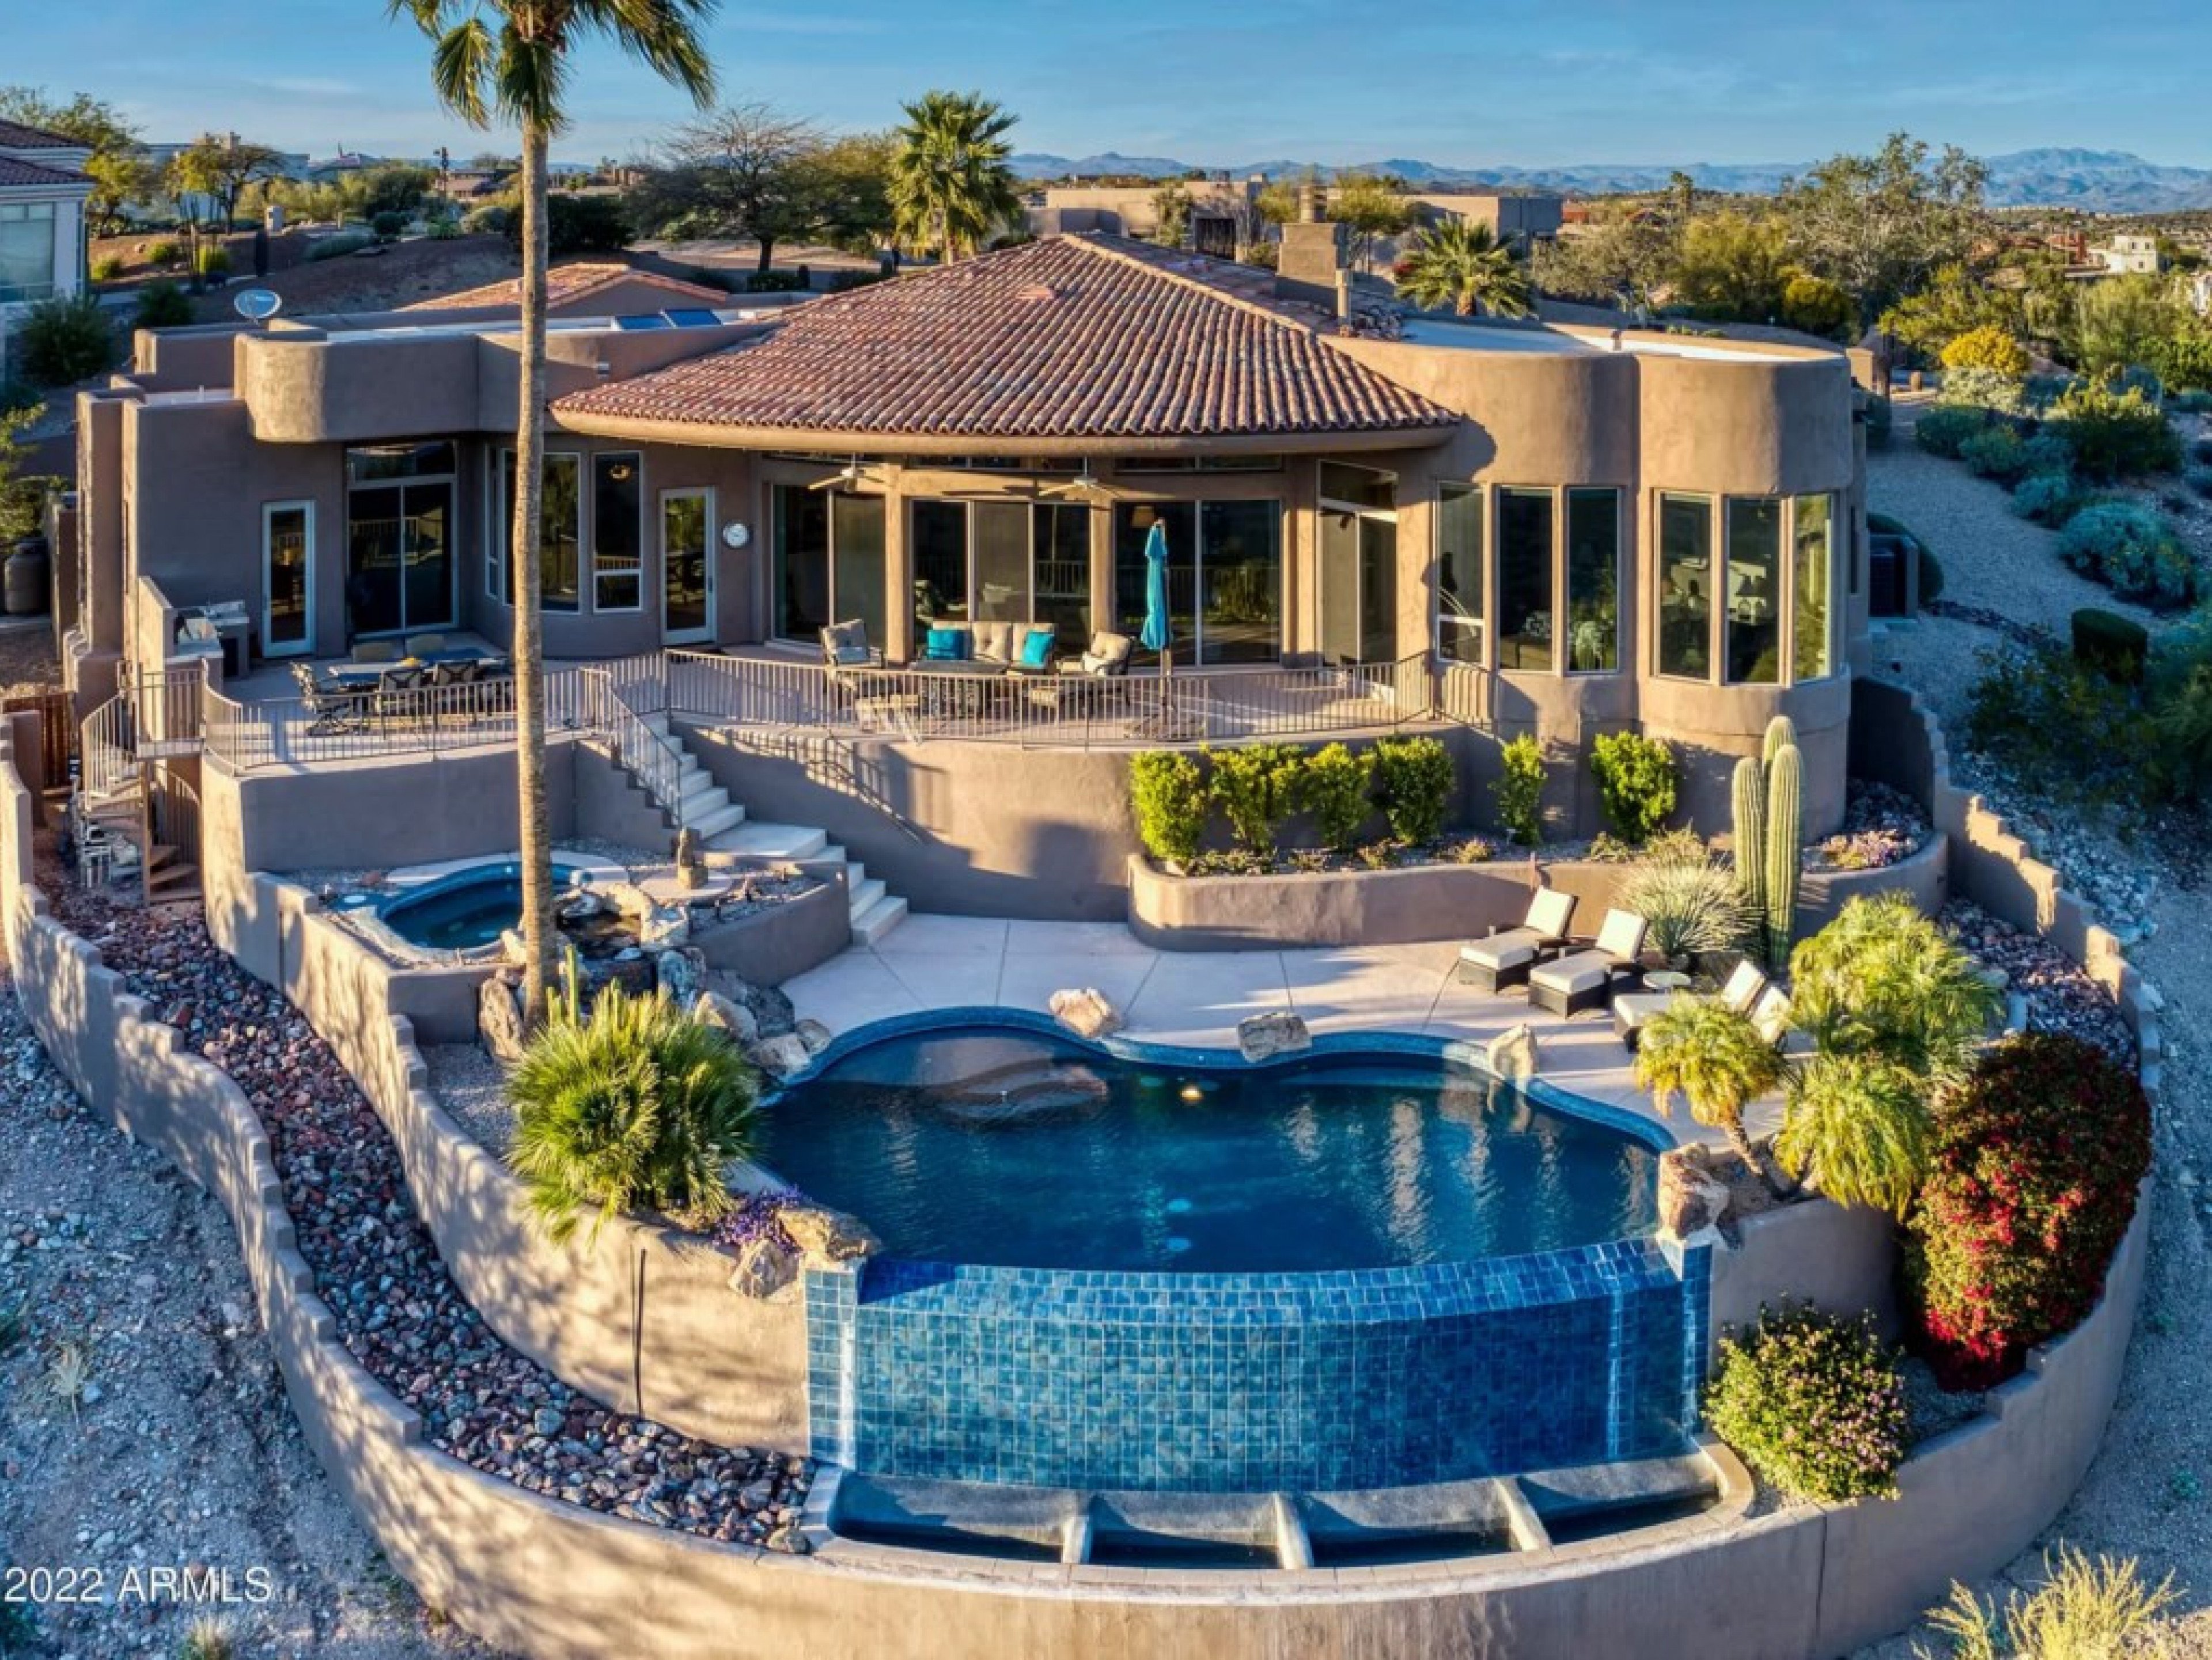 Phoenix 17 - Phoenix vacation rentals with pools  